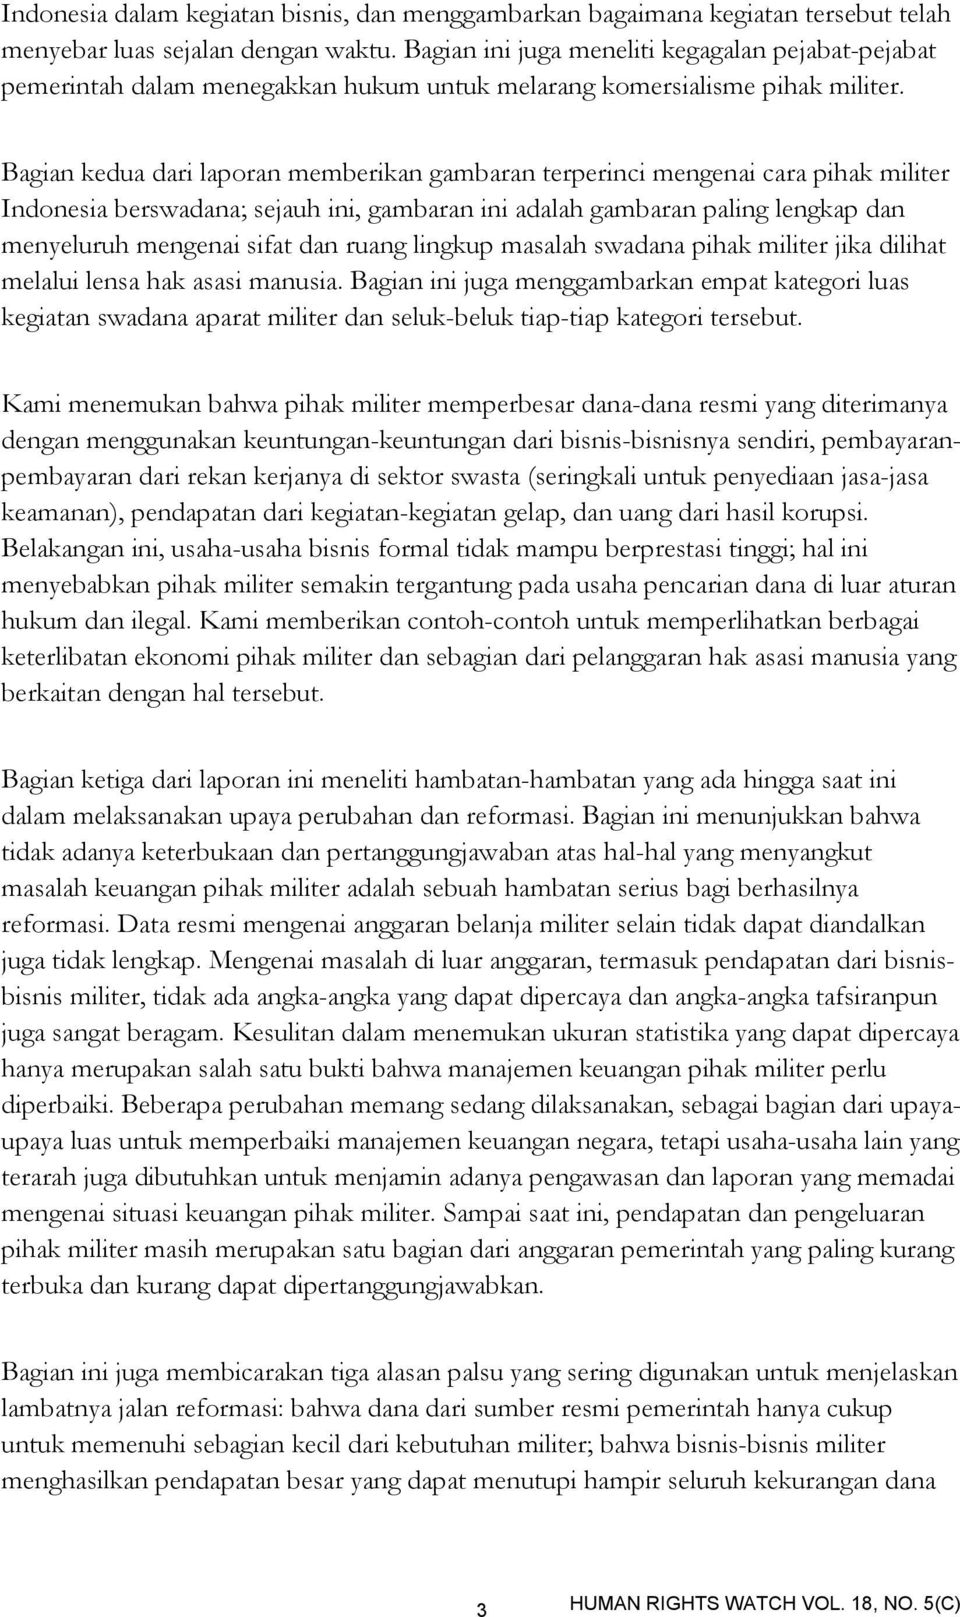 Bagian kedua dari laporan memberikan gambaran terperinci mengenai cara pihak militer Indonesia berswadana; sejauh ini, gambaran ini adalah gambaran paling lengkap dan menyeluruh mengenai sifat dan